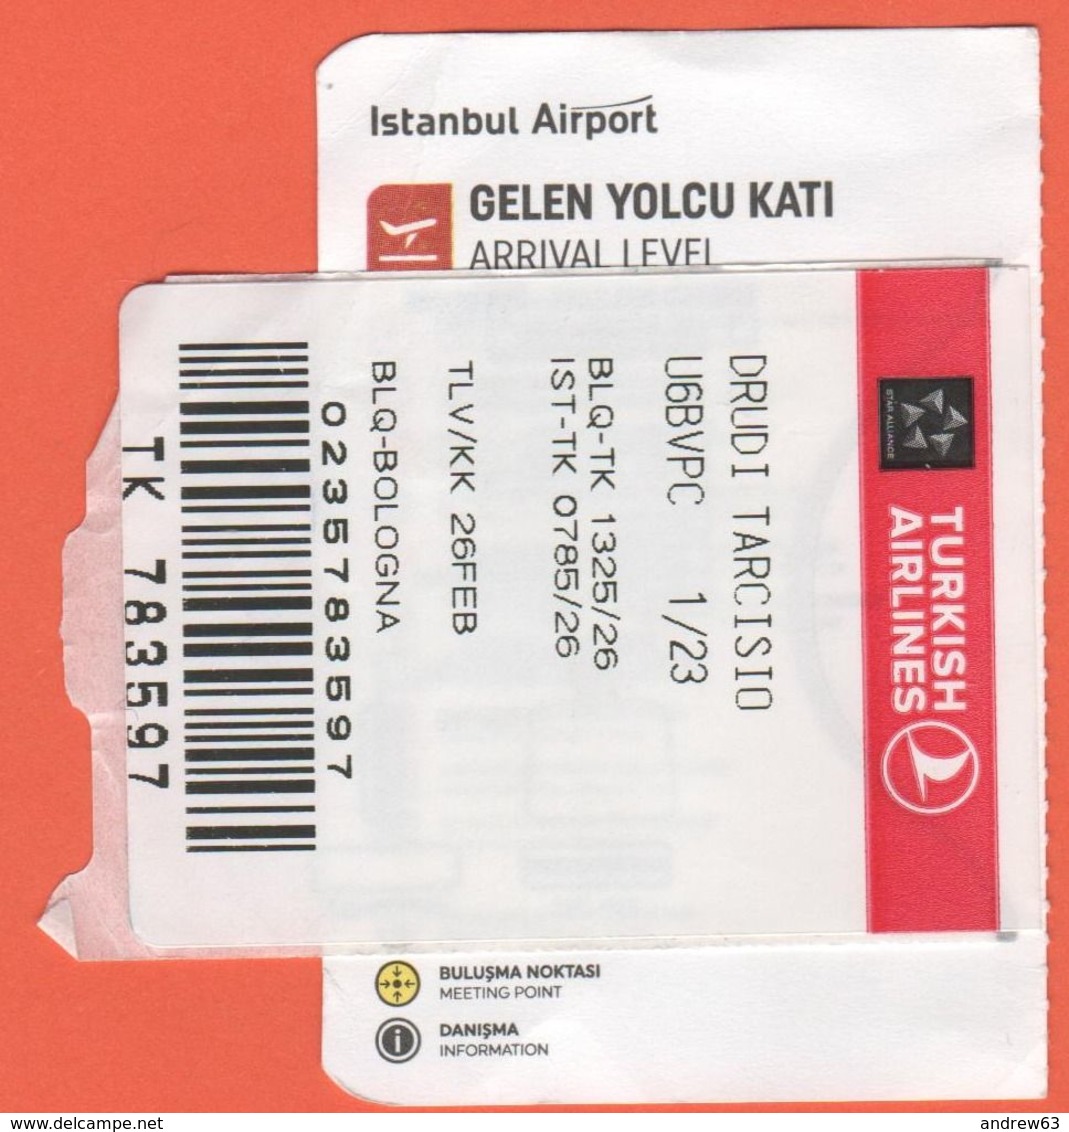 TURKISH AIRLINES - 2020 - BOARDING PASS - BİNİŞ KARTI - TK 1325 - IST-BLQ - Istanbul-Bologna - Wereld